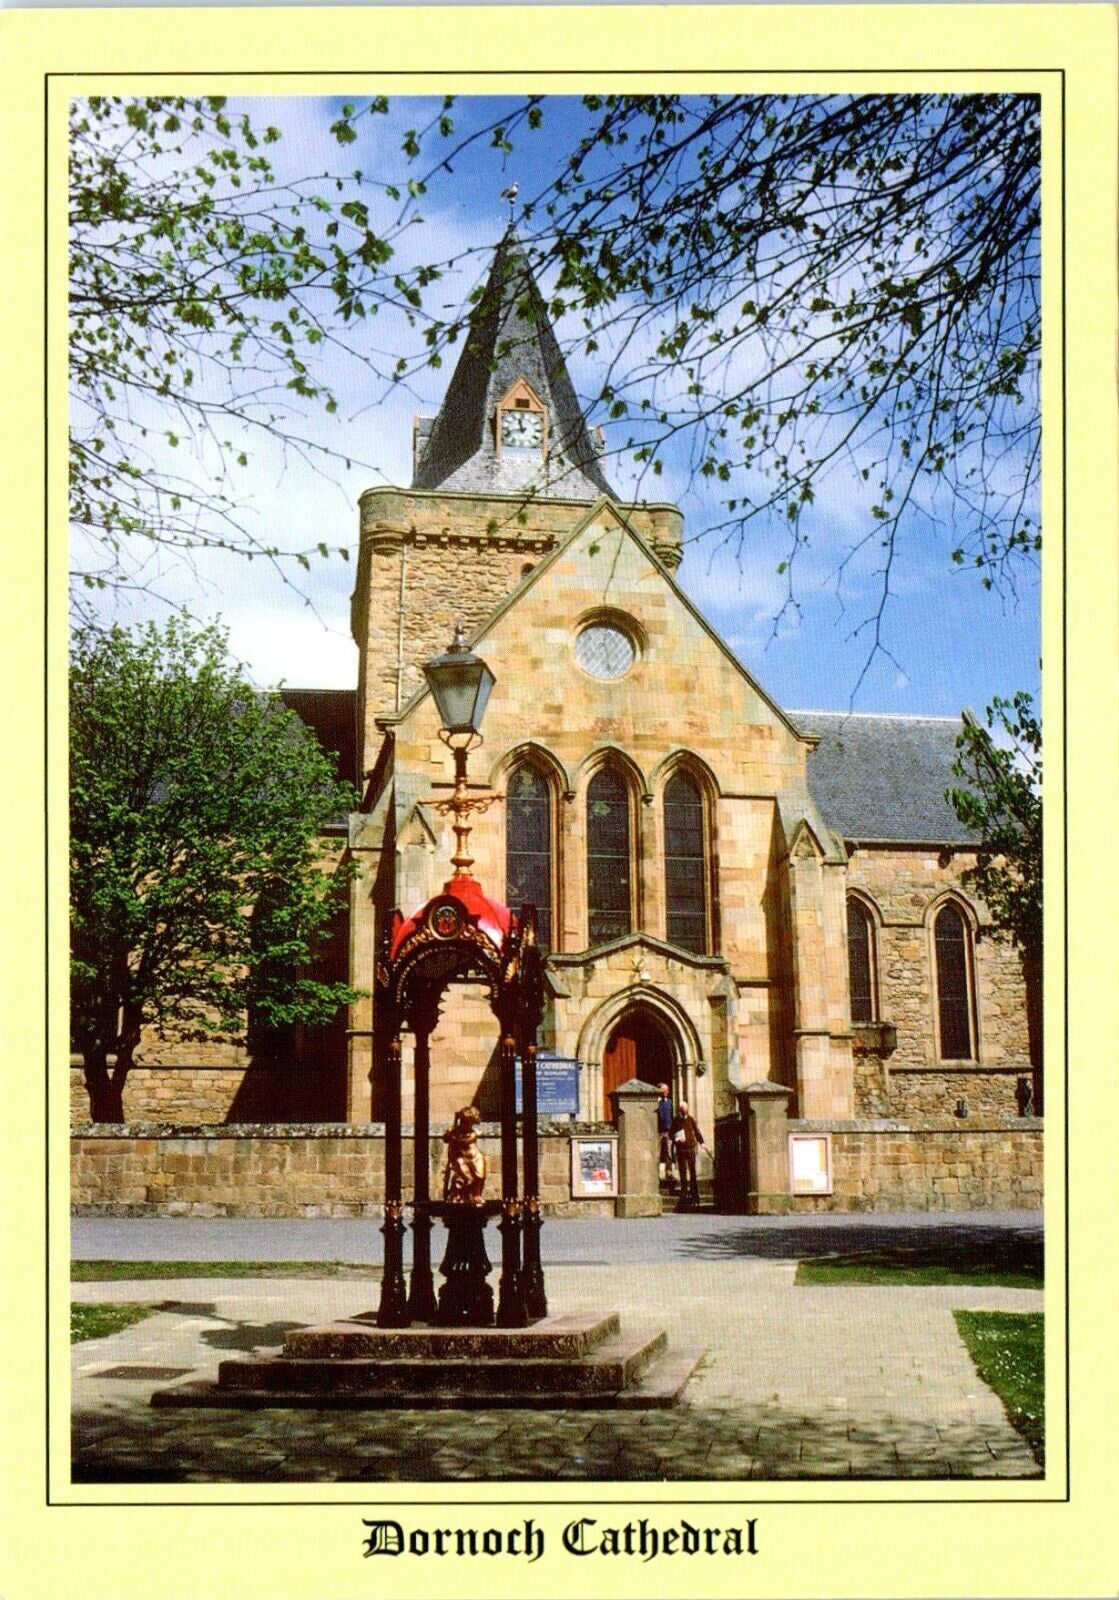 Dornoch Cathedral, Royal Burgh of Dornoch in Sutherland, Scotland Postcard